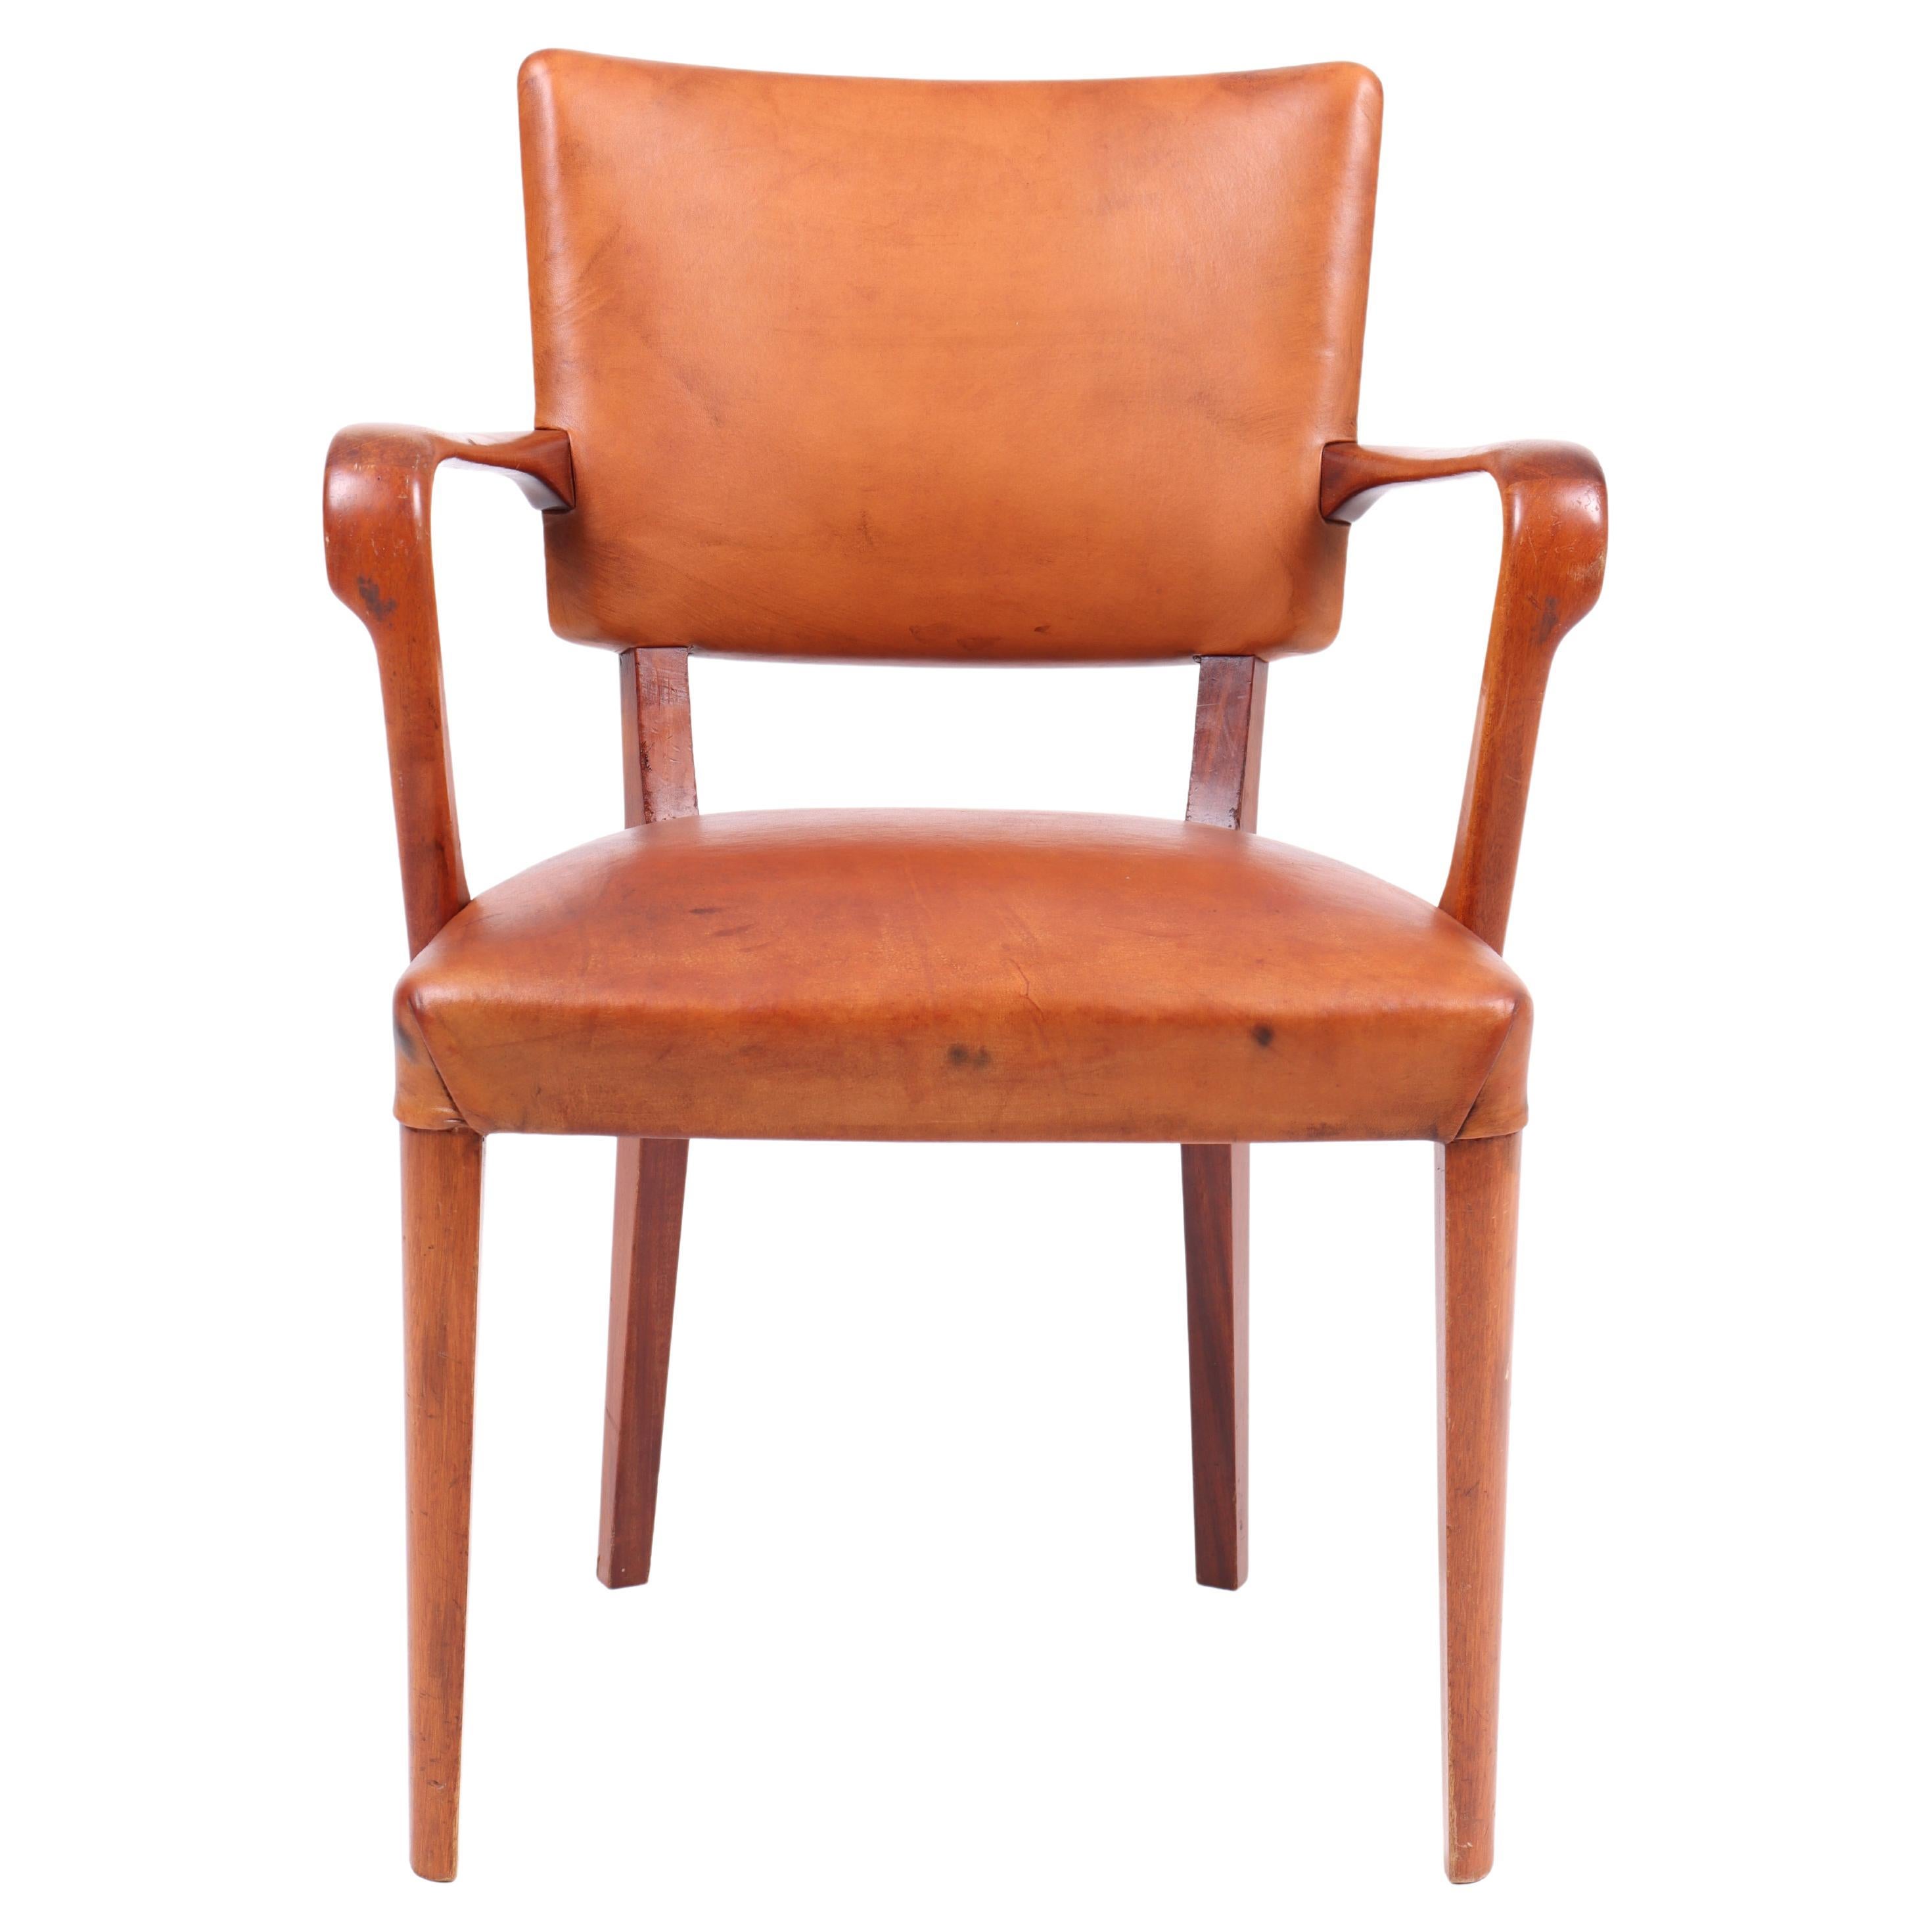 "Timeless Danish Armchair: Walnut & Leather Elegance for Stylish Comfort."